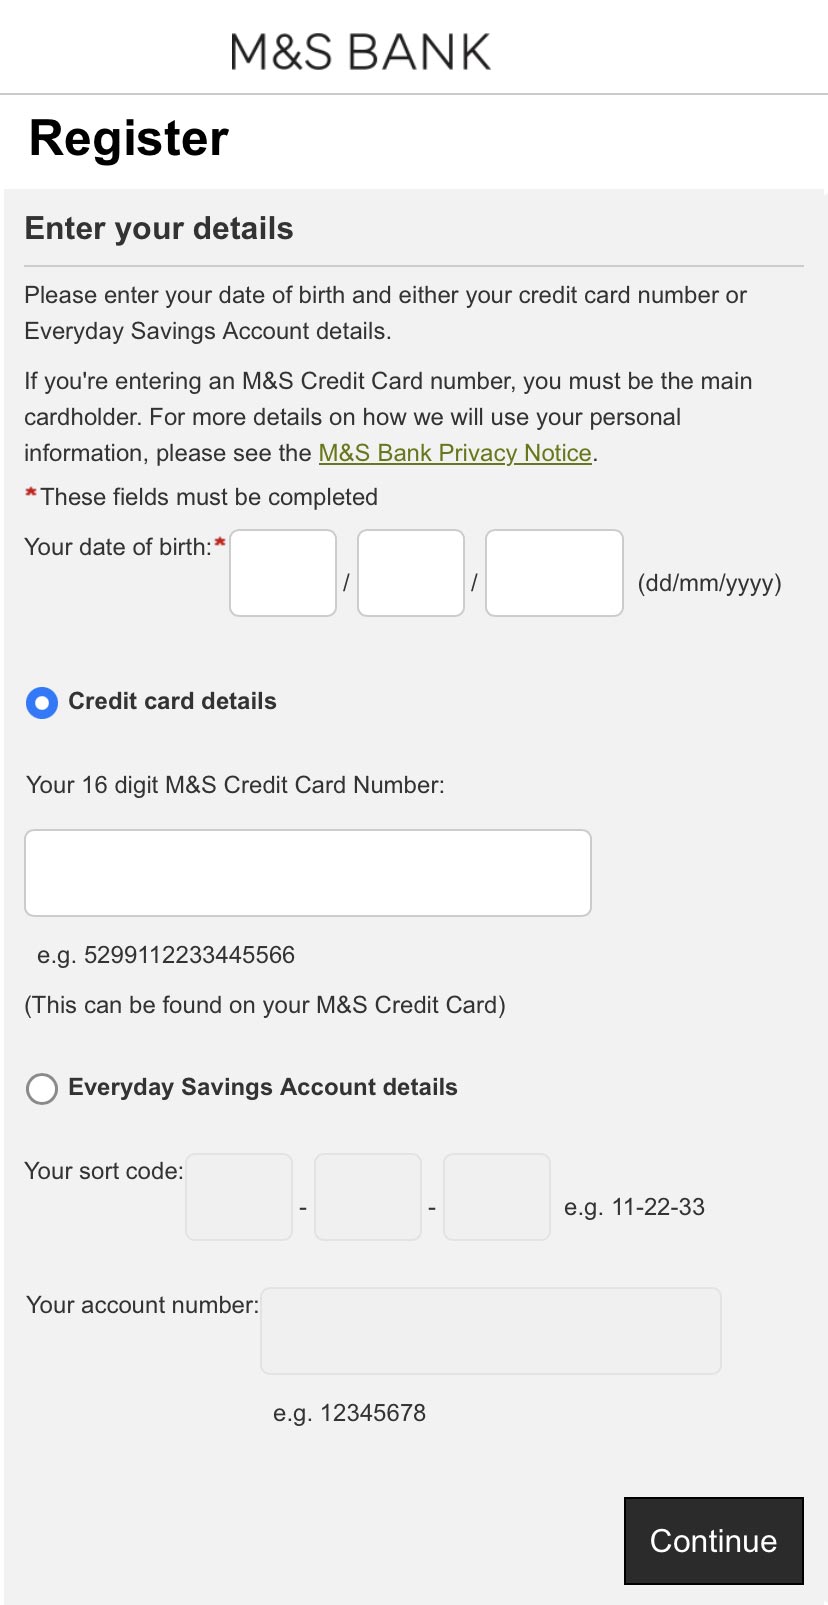 Internet Banking registration account details screen.